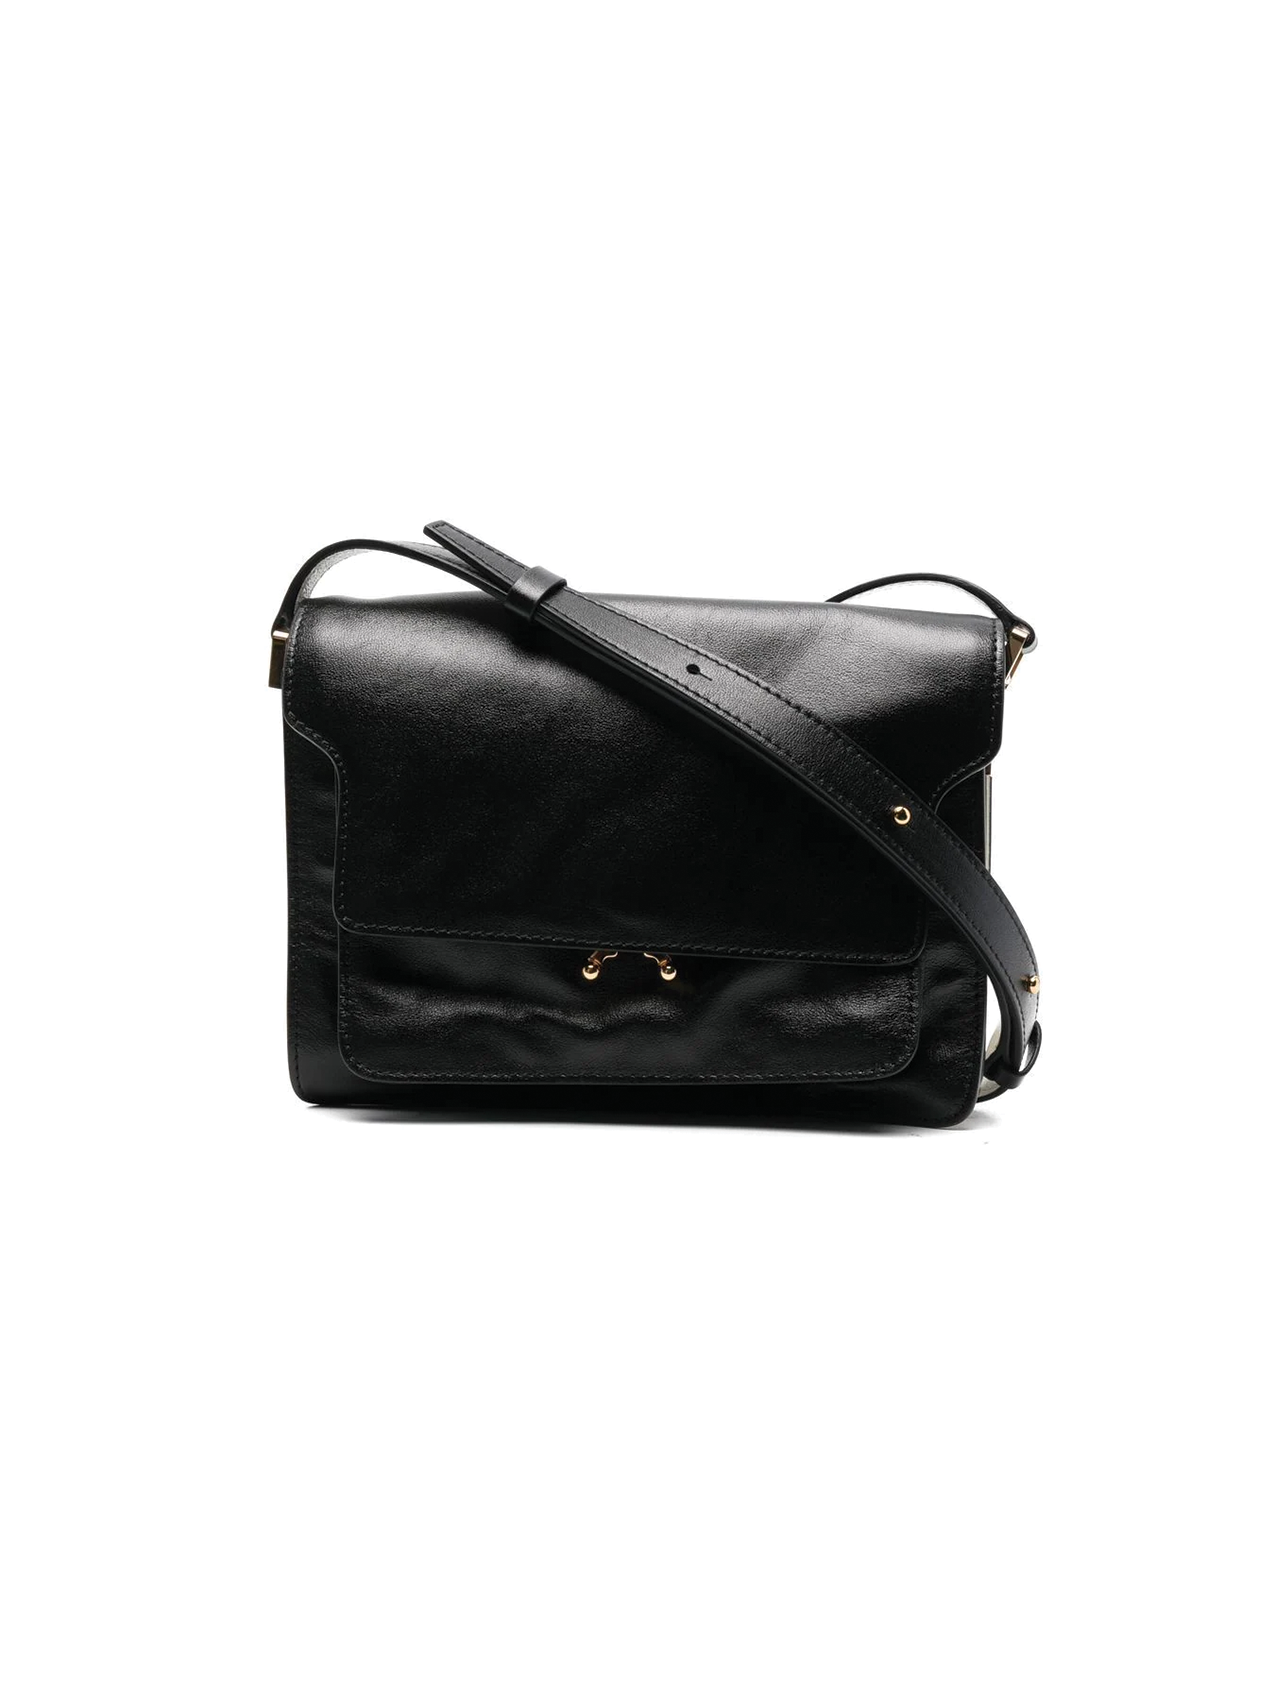 MARNI: Trunk bag in tumbled leather - Black